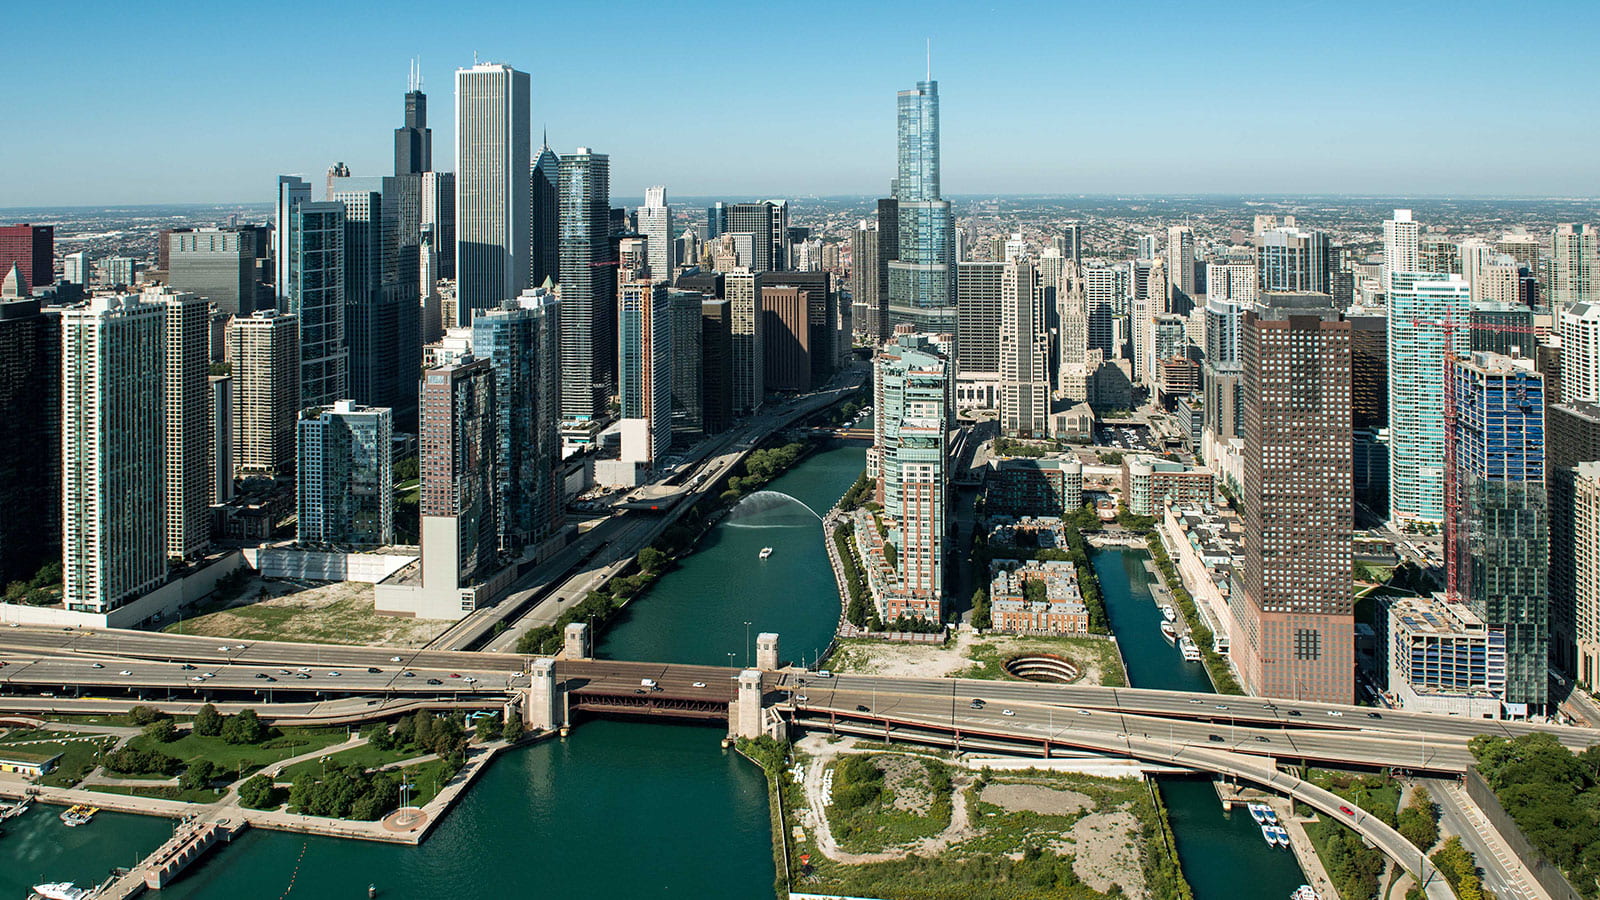 Photograph of Chicago skyline